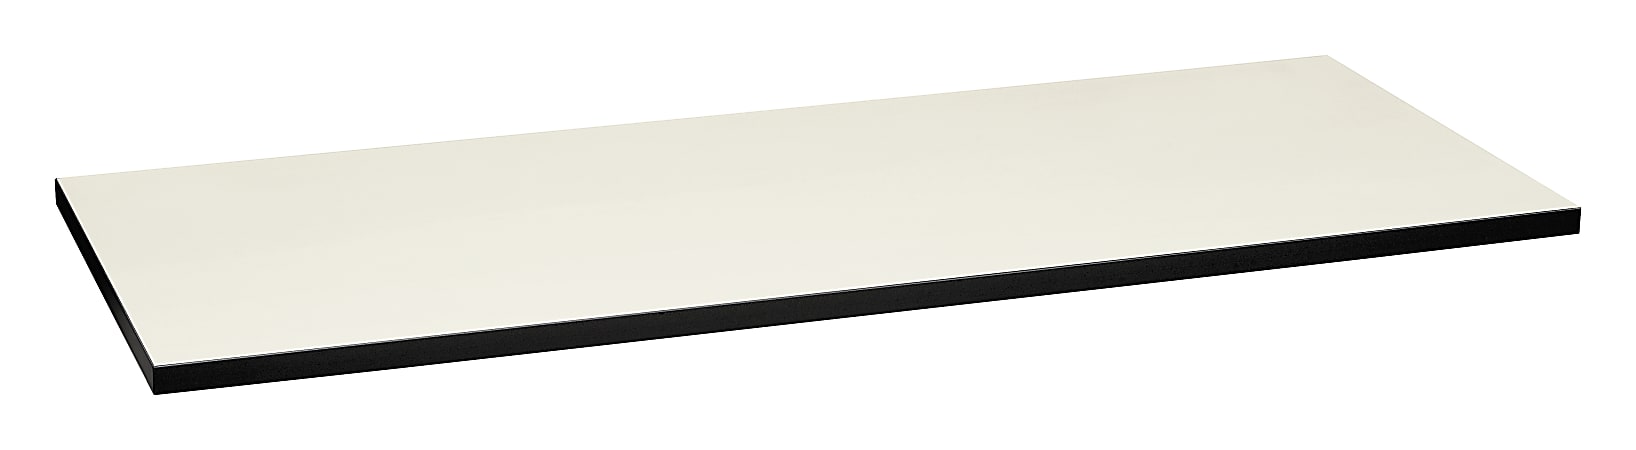 HON Huddles Series™ Multipurpose Table Top, 60"W x 24"D, Silver/Black